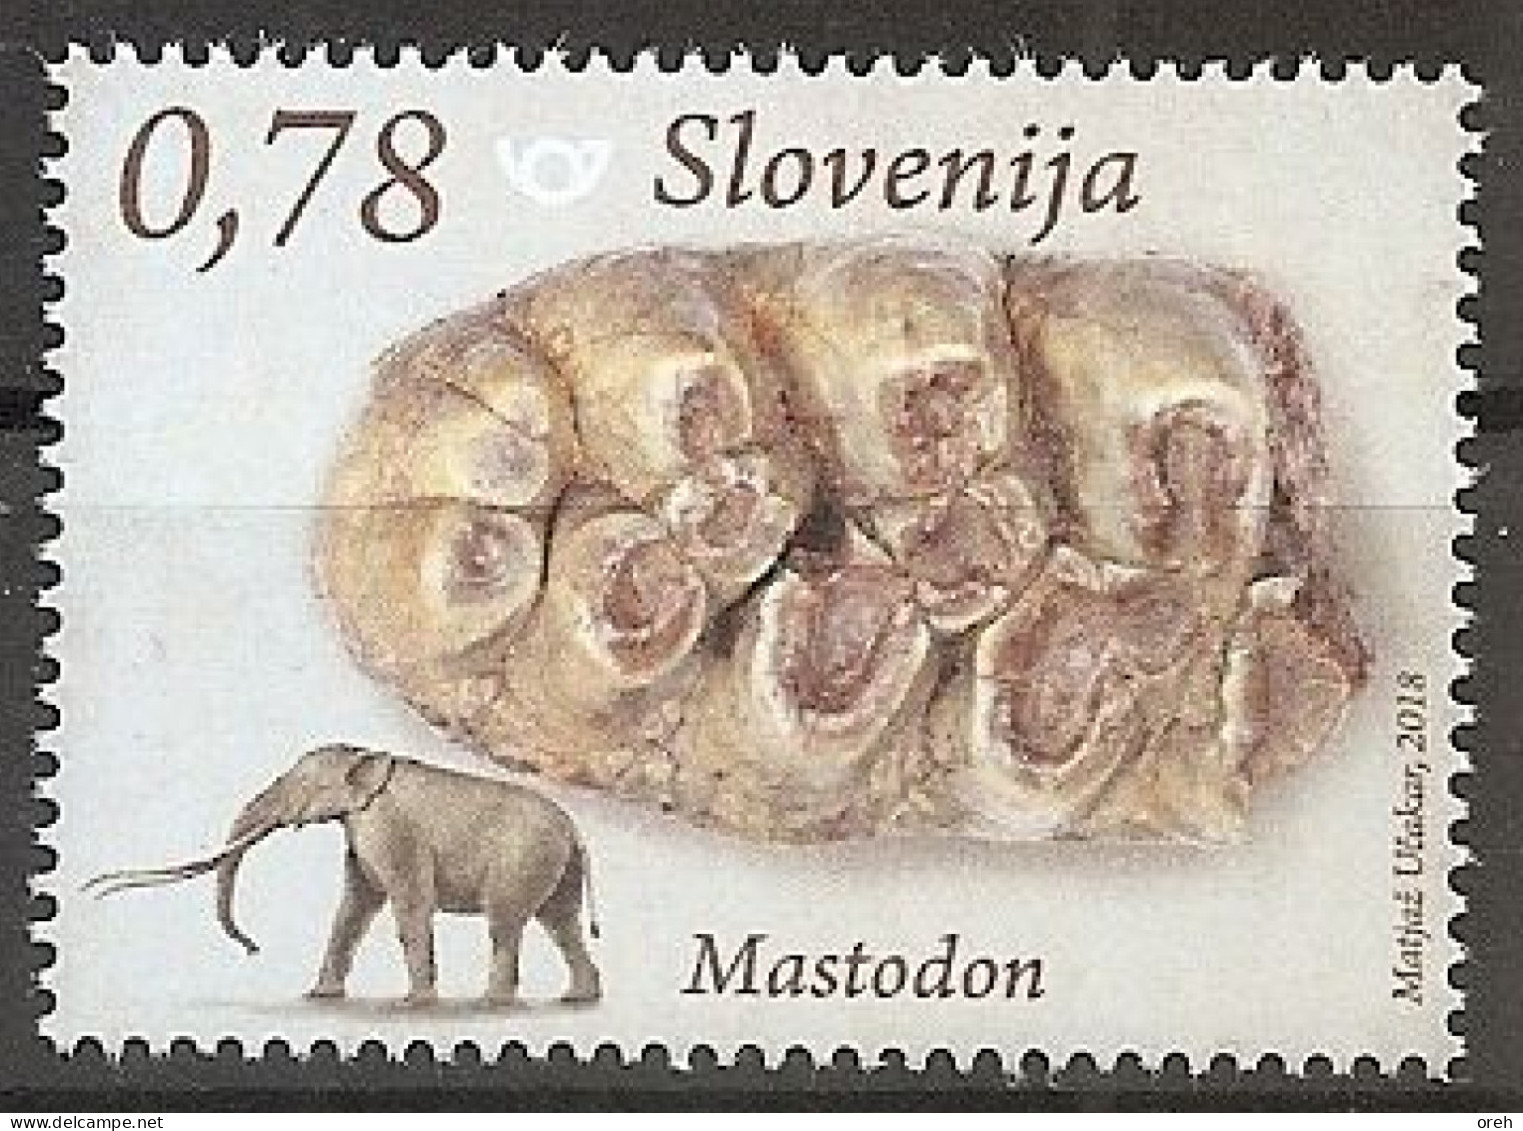 SLOVENIA 2018,new 23.3.,FOSSIL MAMMALS OF SLOVENIA,MASTODON,MNH - Fossielen